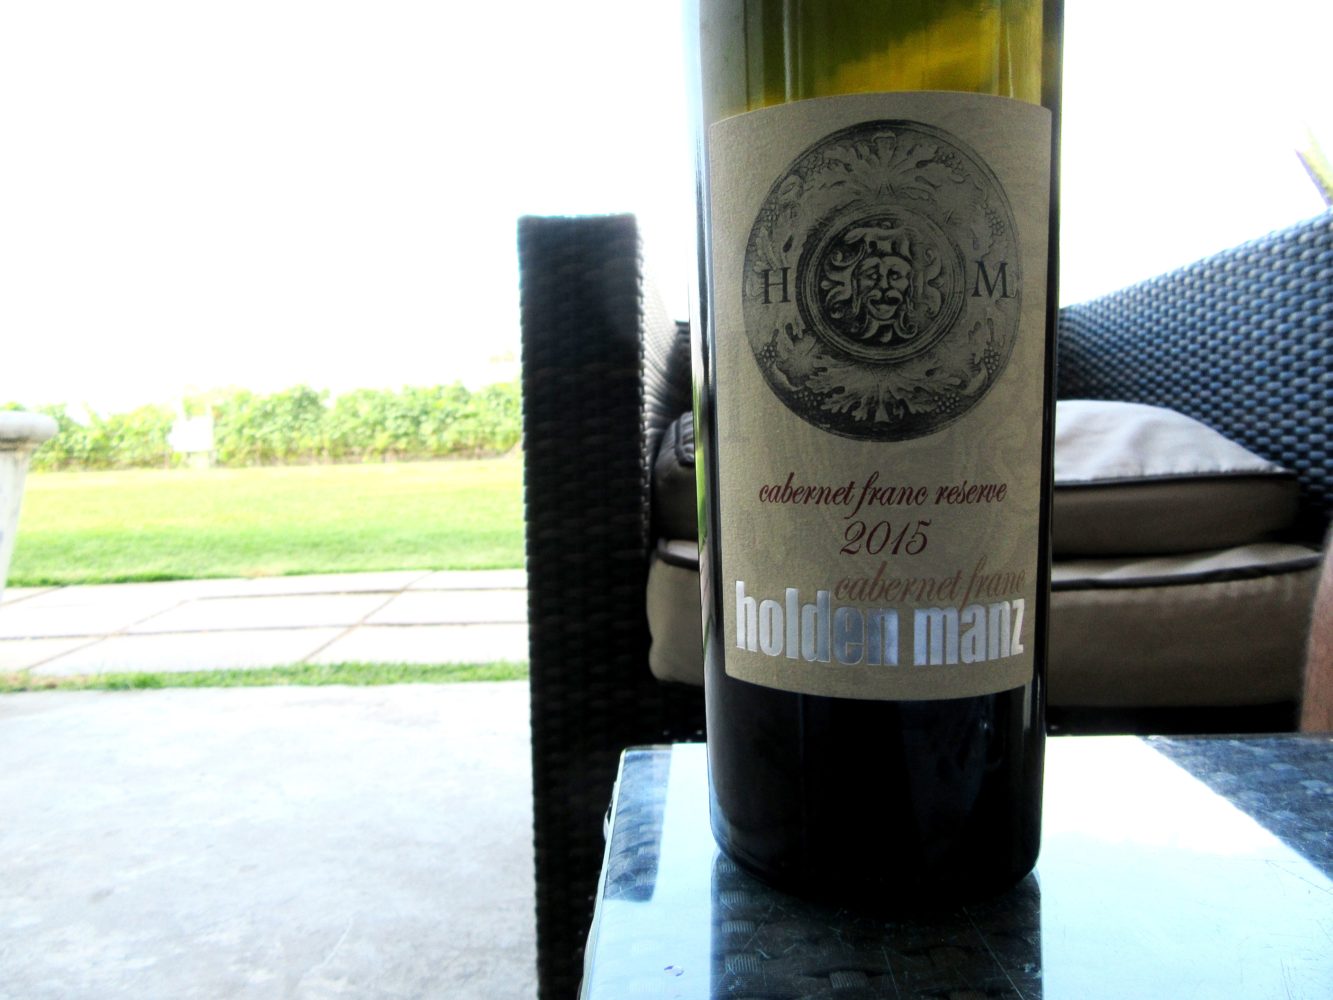 Holden Manz, Cabernet Franc 2015, Franschhoek, South Africa, Wine Casual